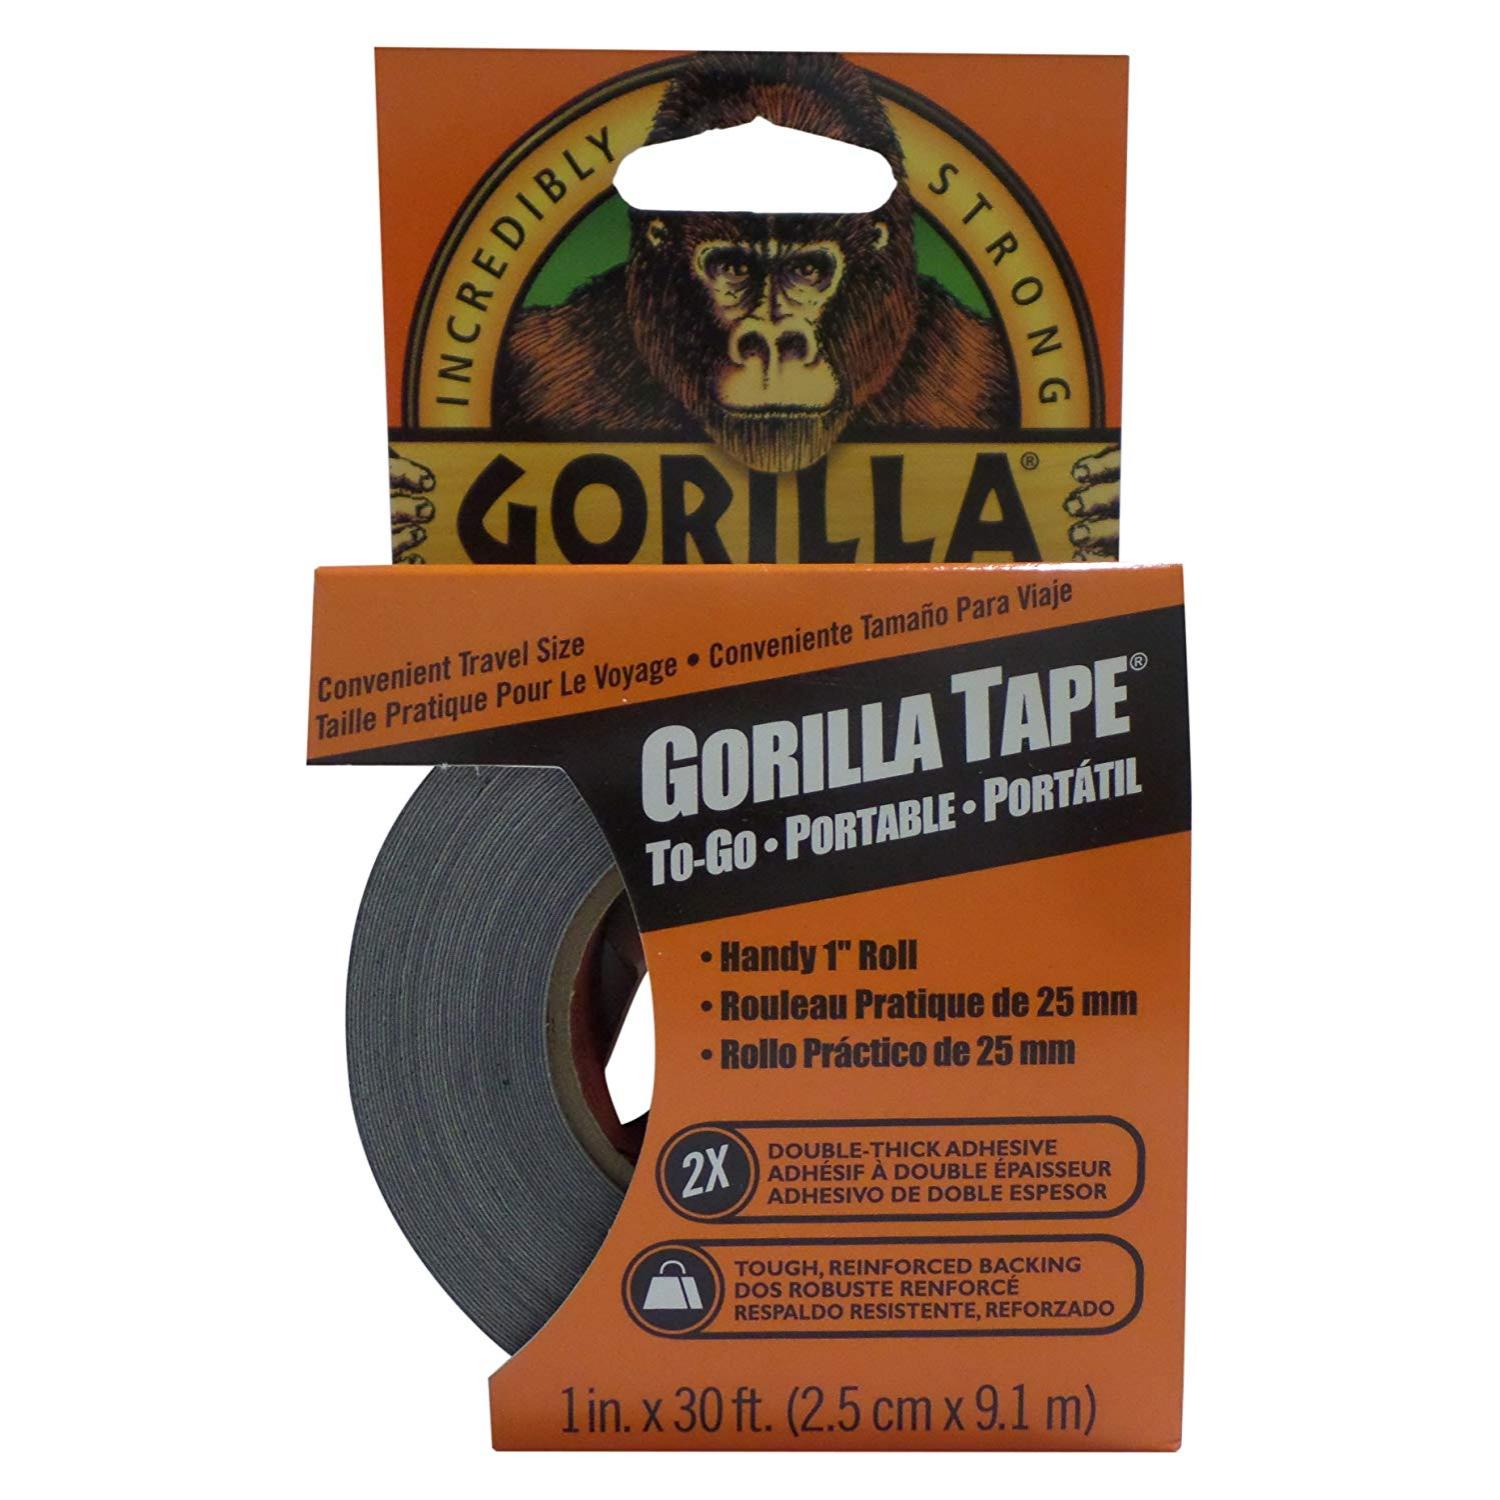 Gorilla Tape to-Go